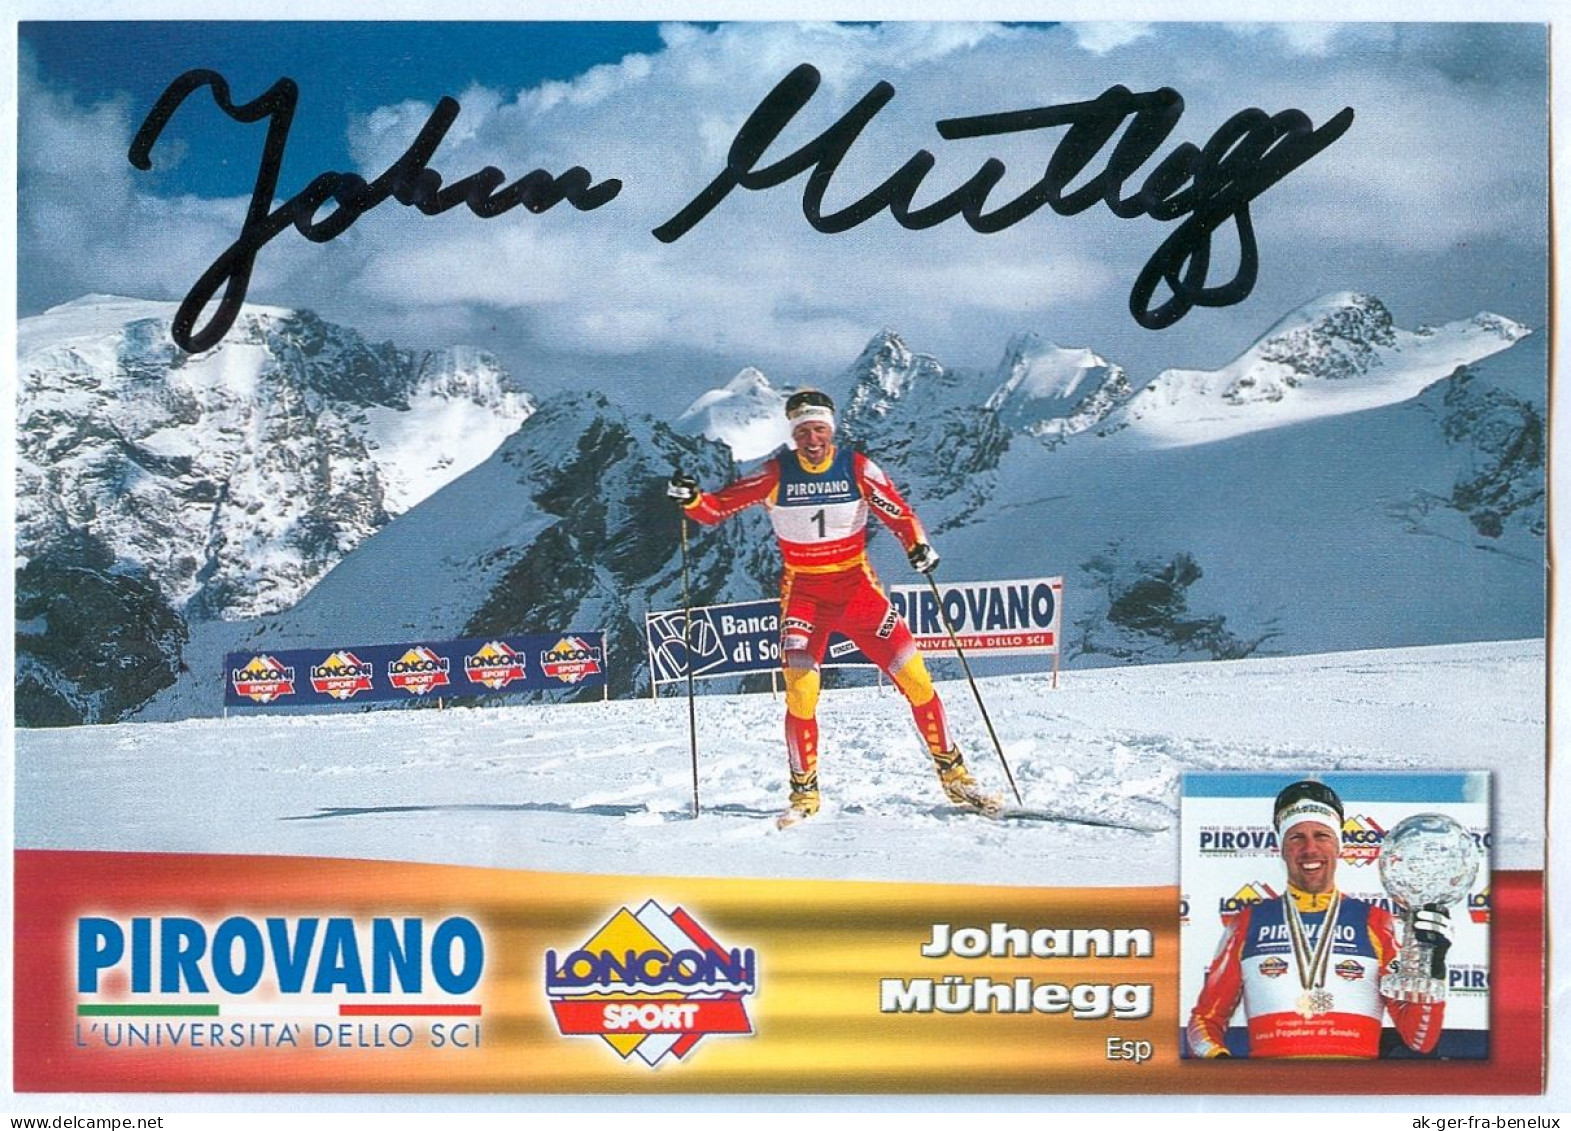 Autogramm AK Langläufer Johann Mühlegg Marktoberdorf Im Ostallgäu Grainau Olympia FEDI Schi Cross-country Skiing DSV - Autogramme